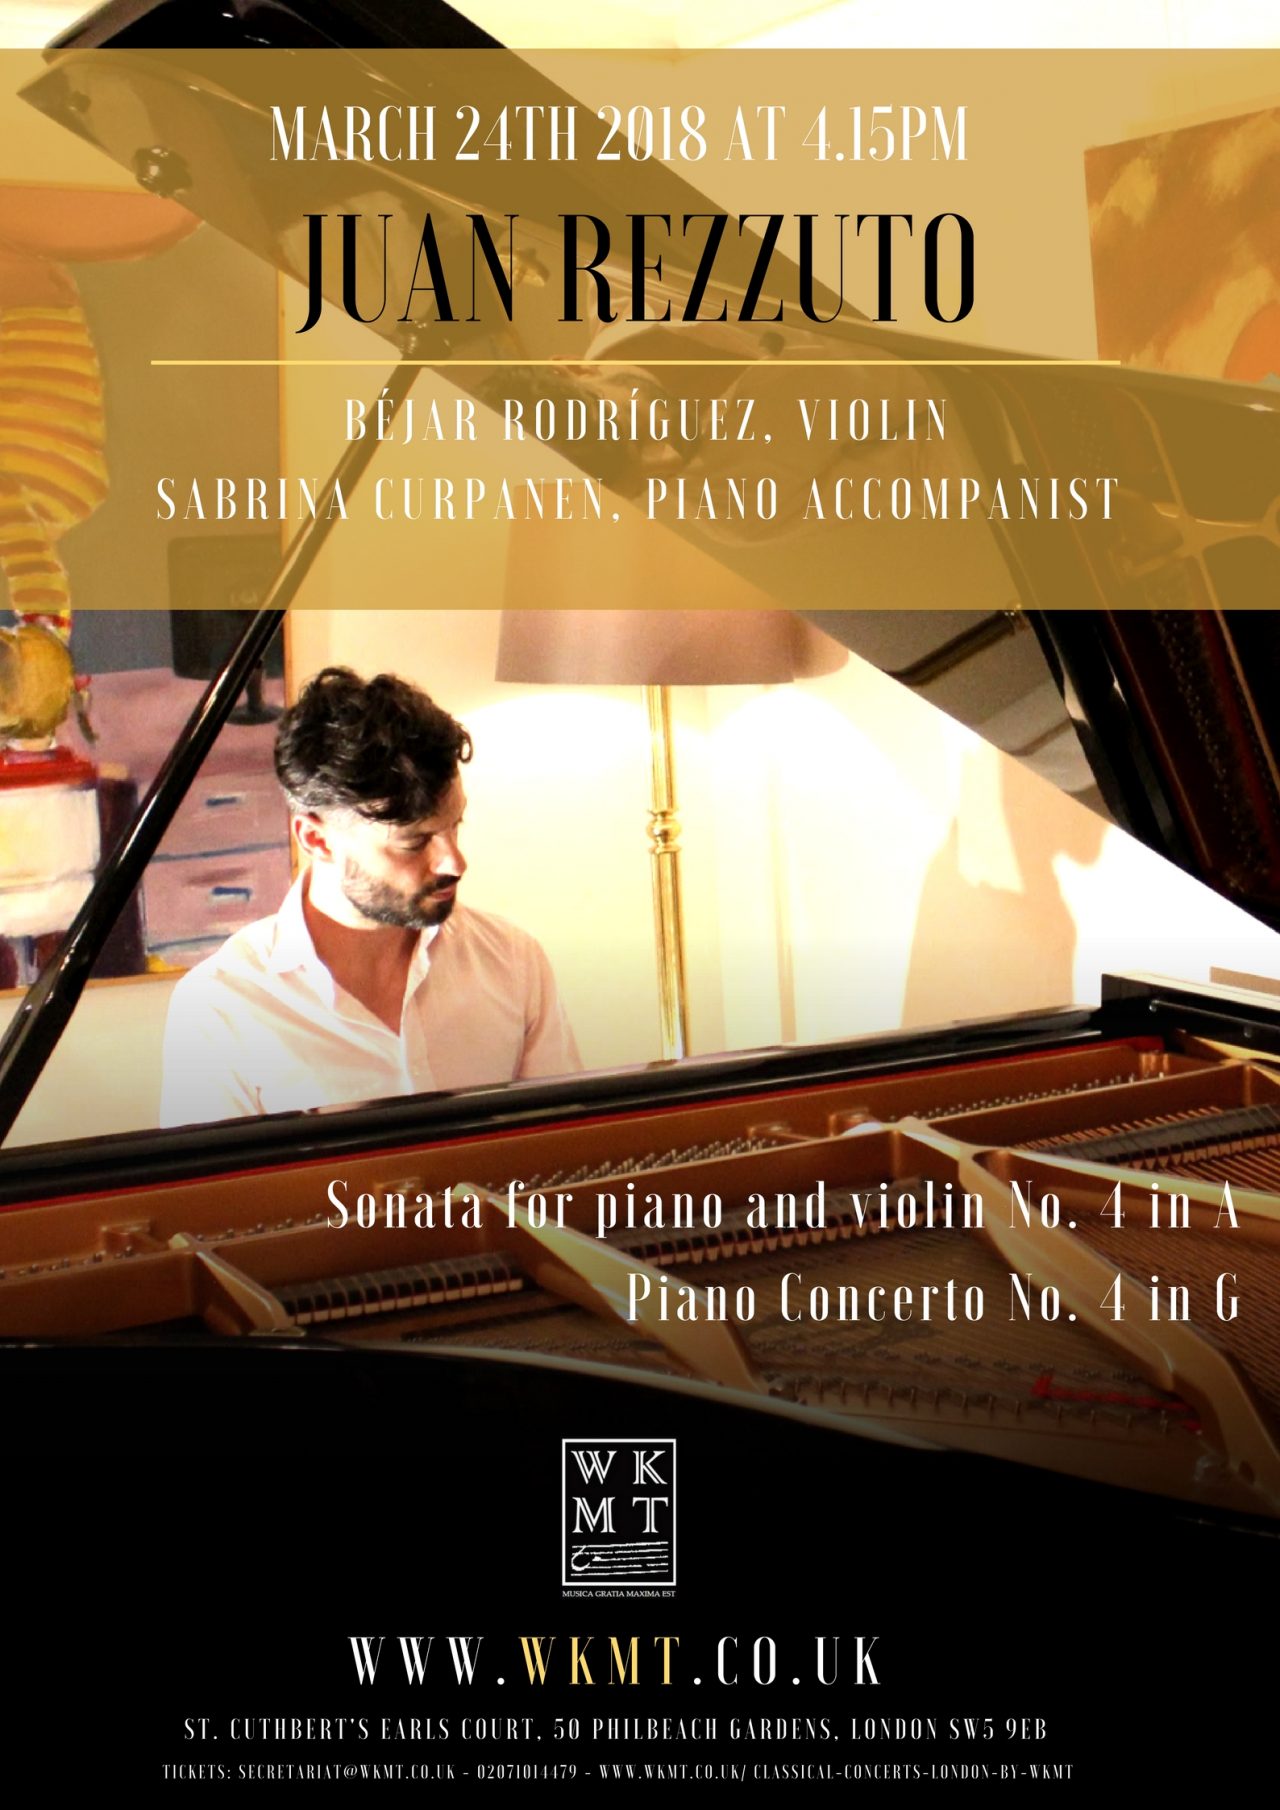 Juan Rezzuto playing Haydn